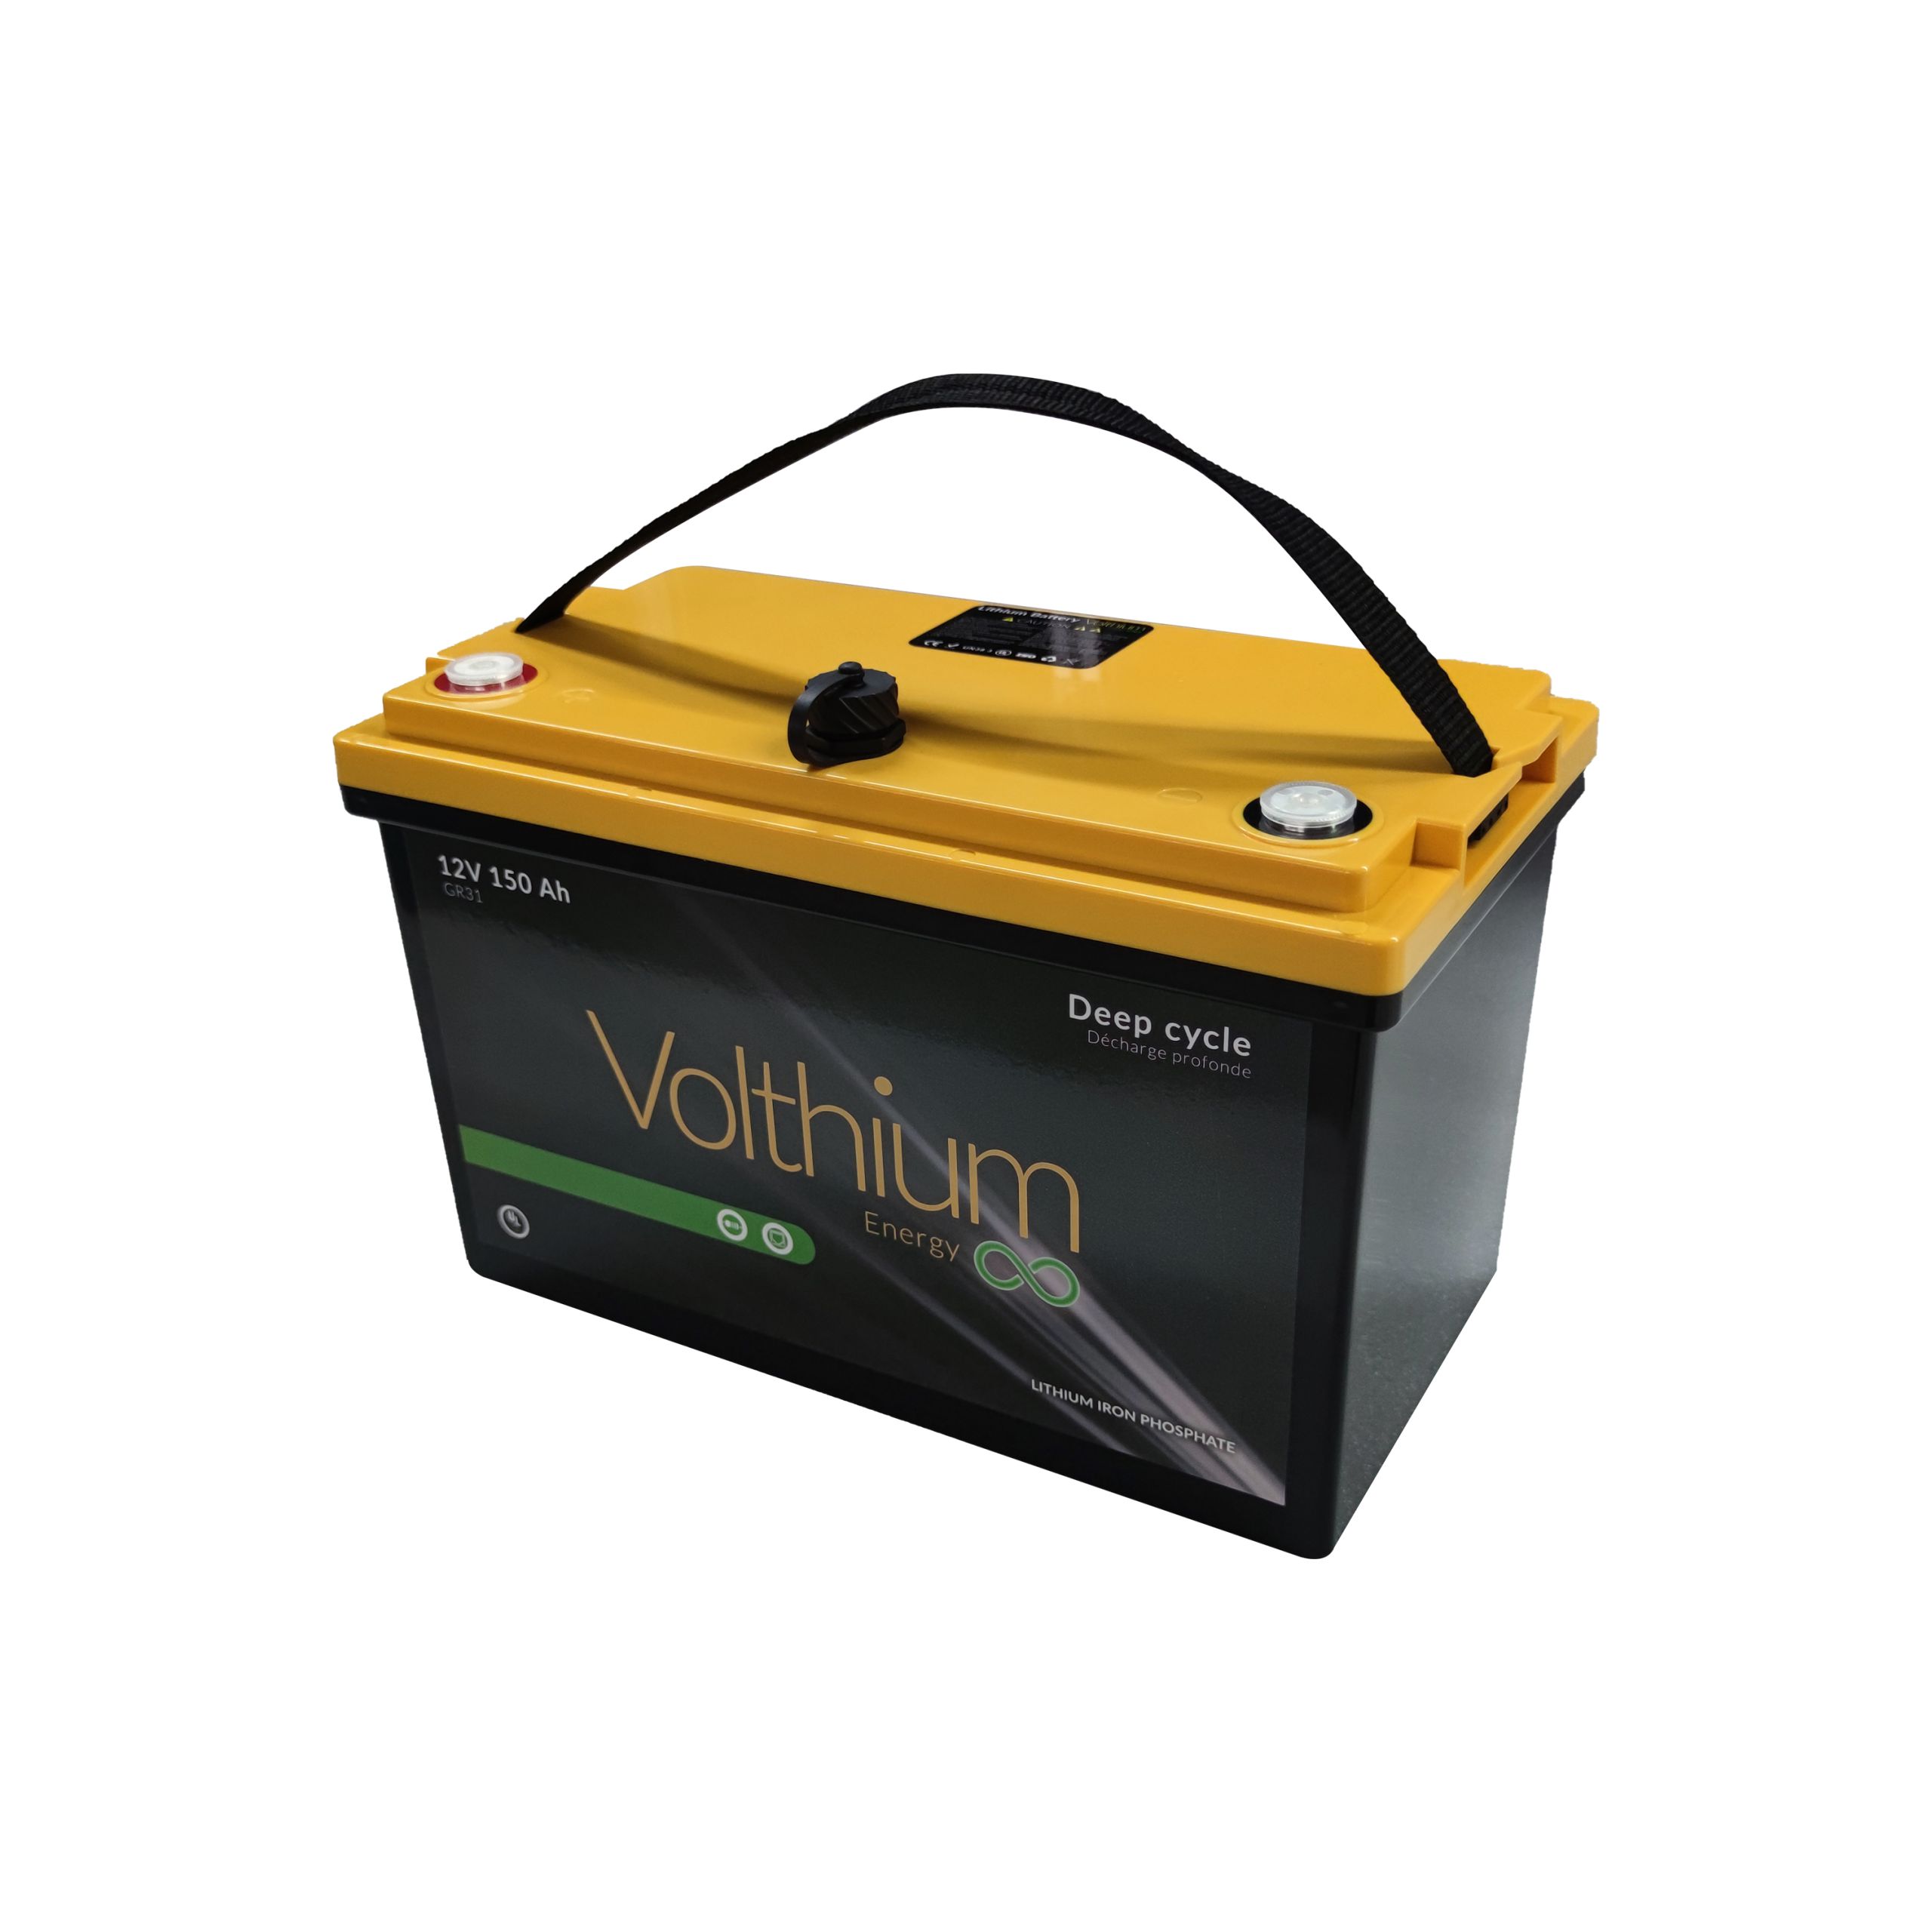 Batterie 12V 400AH 8D - Volthium